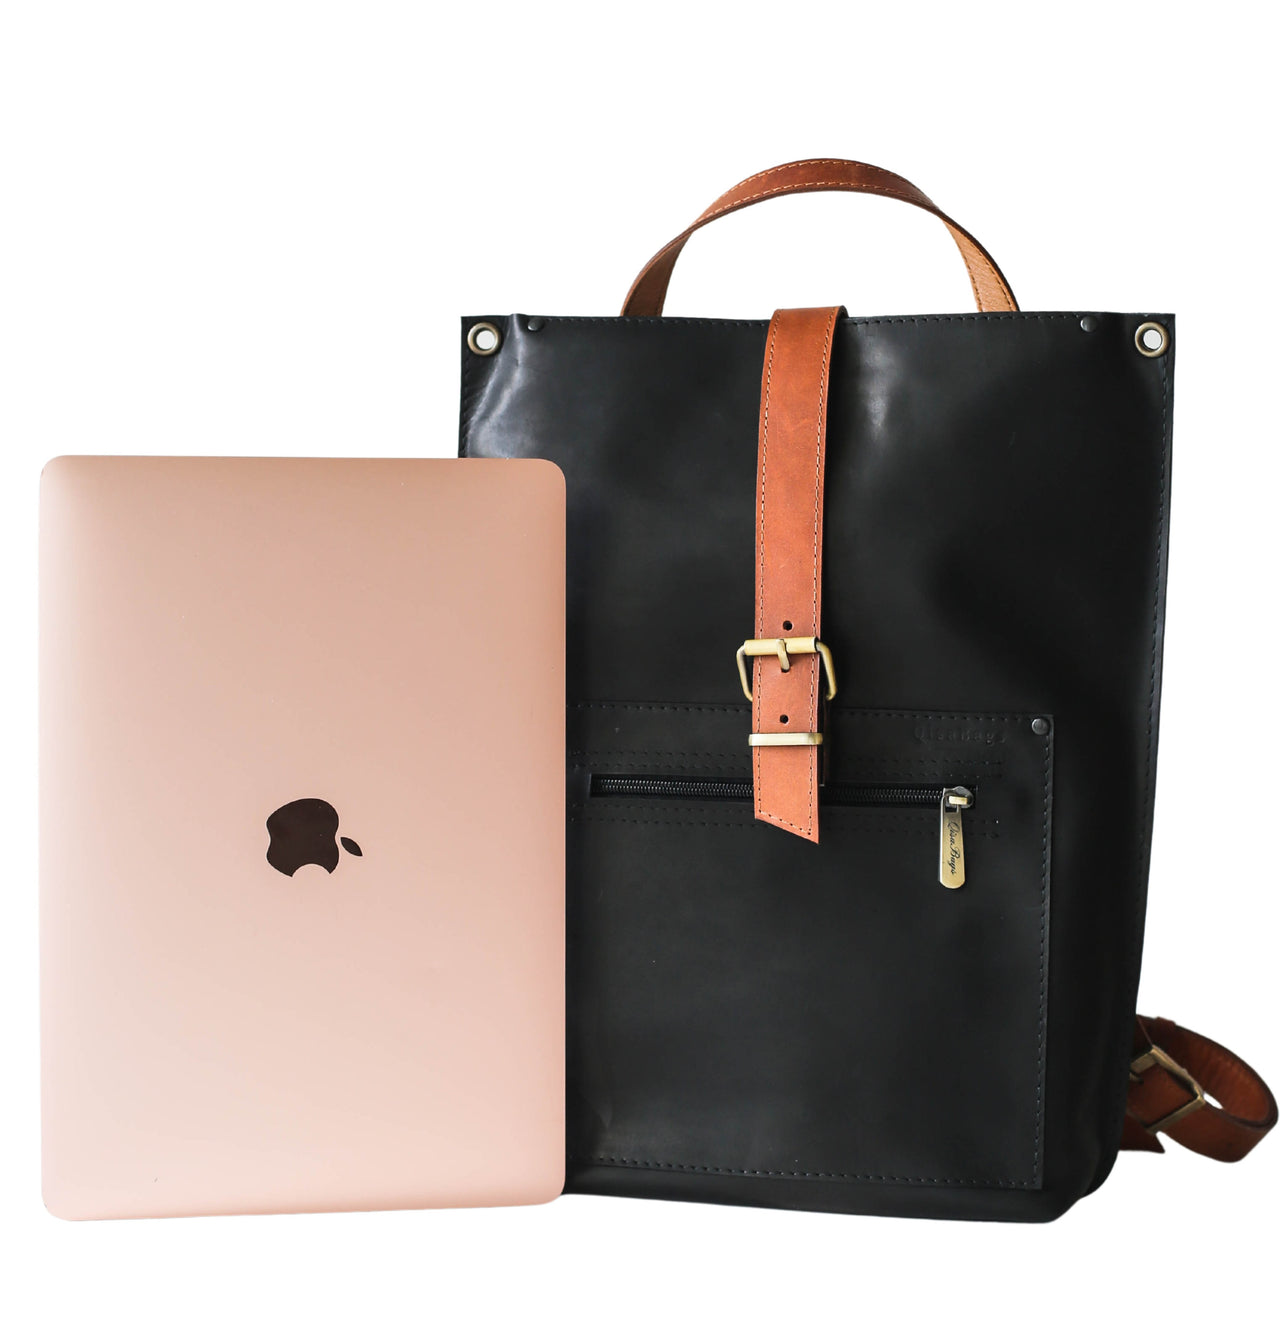 Black leather bag for laptop